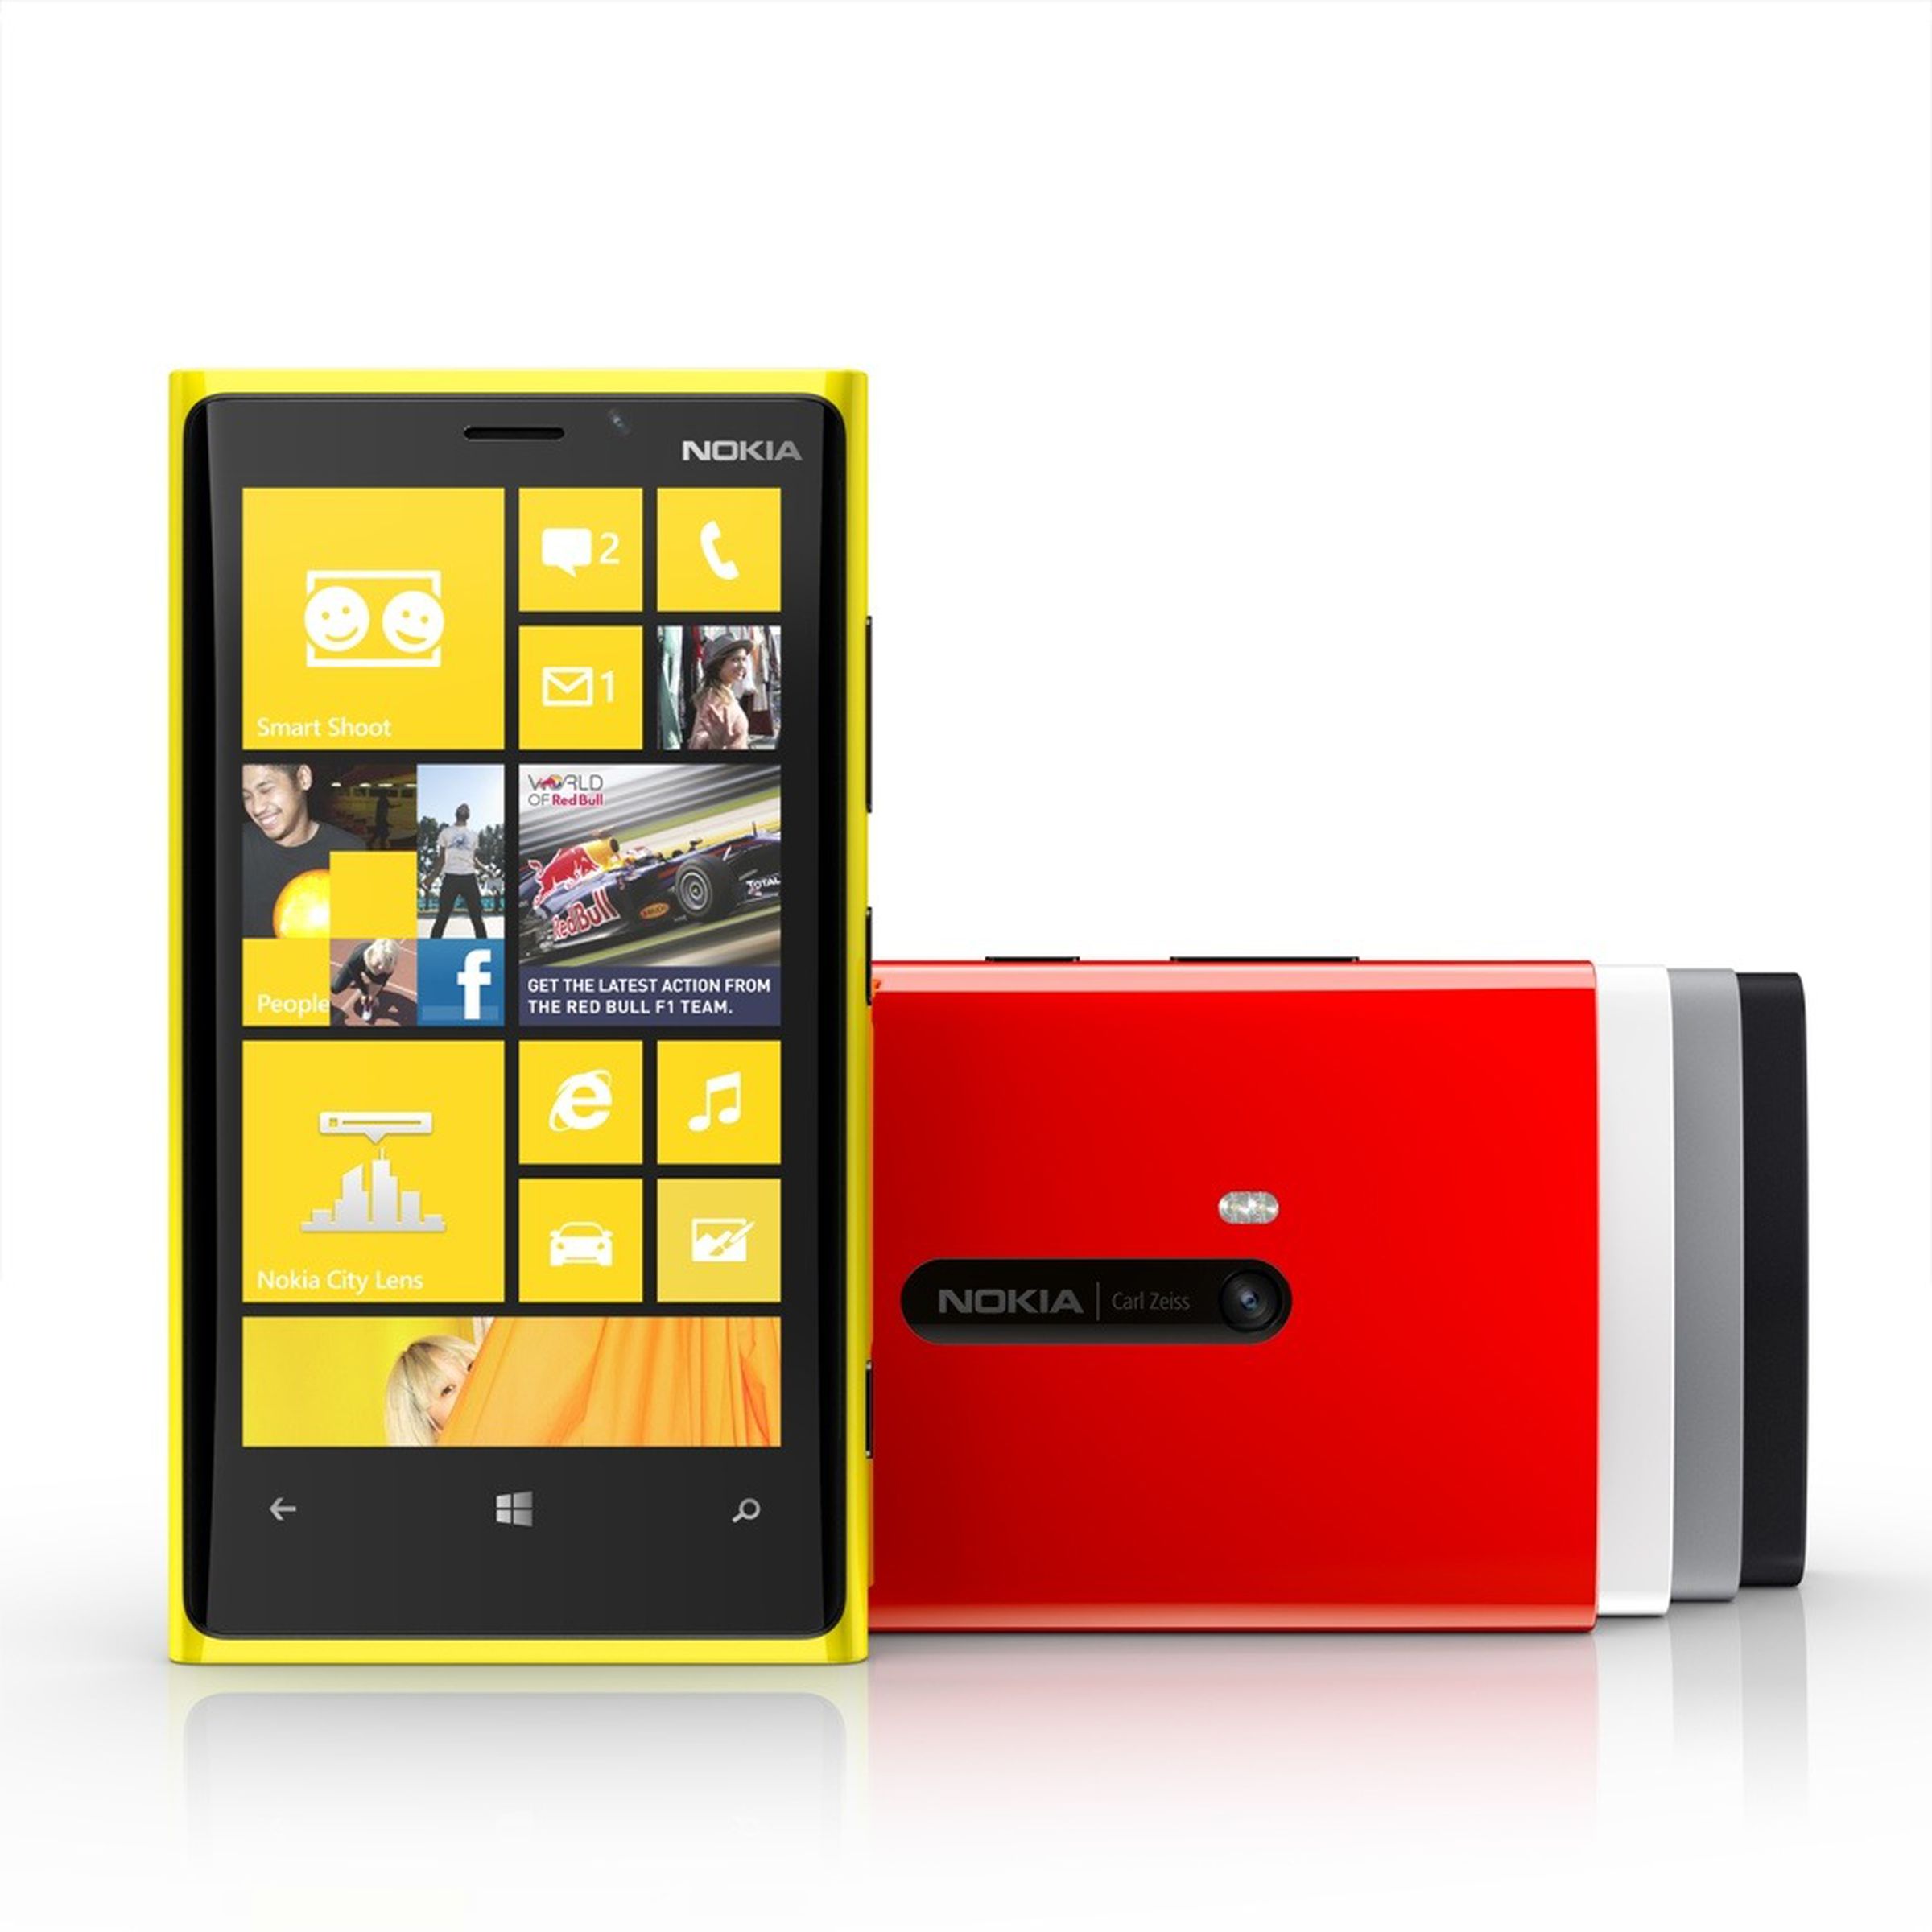 Nokia Lumia 920 pictures